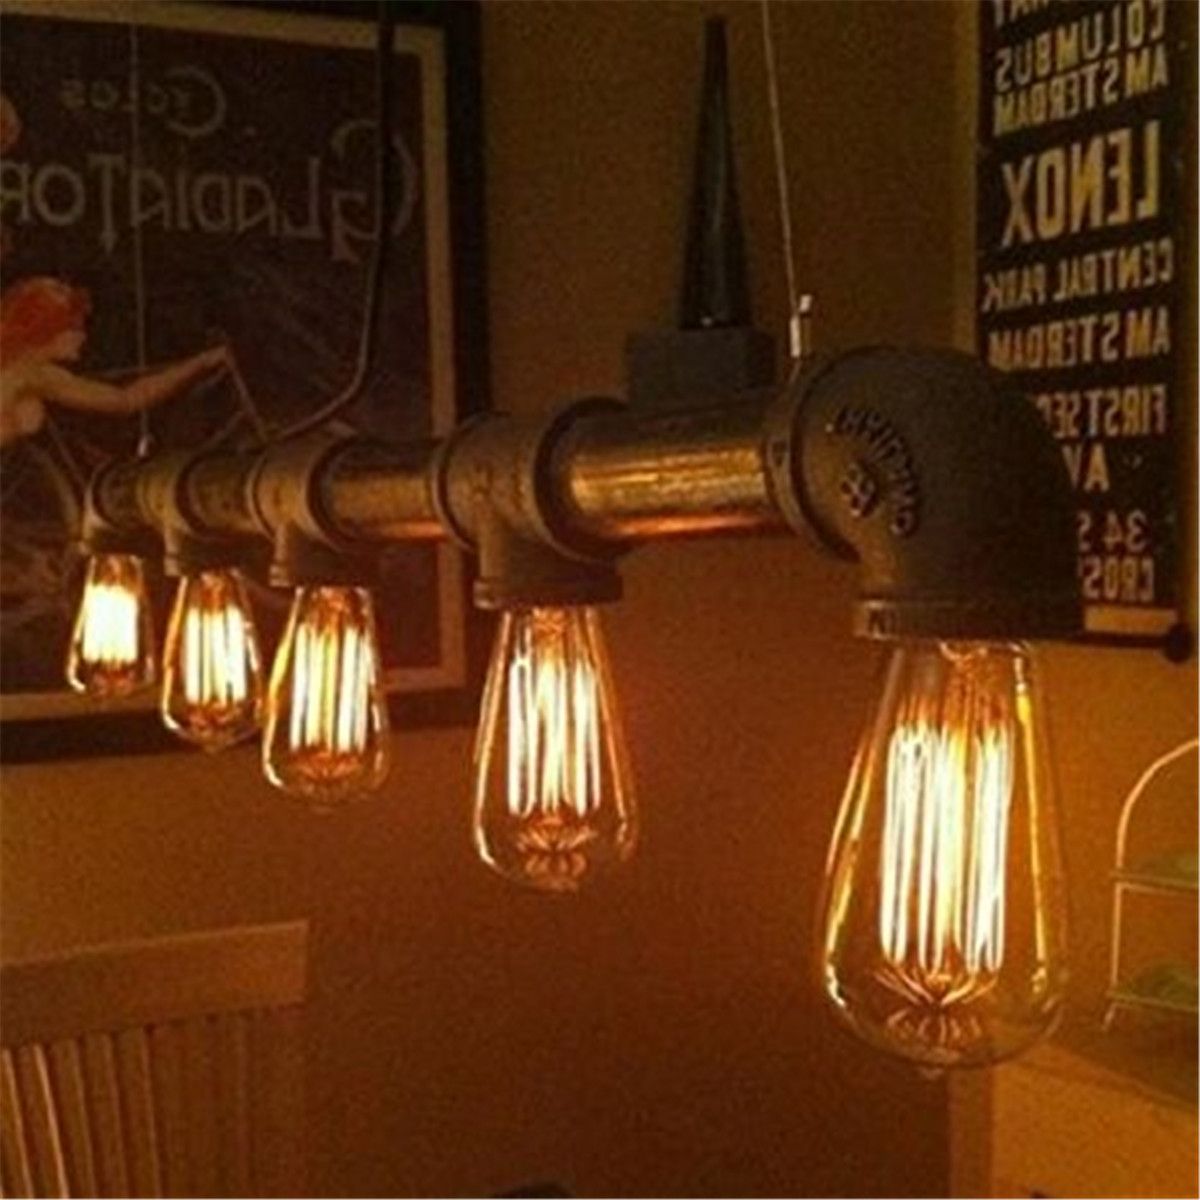 Kingso-E27-40W-ST64-A19-Edison-Vintage-Incandescent-Light-Bulb-Nostalgia-Filament-Lamp-AC220V-954153